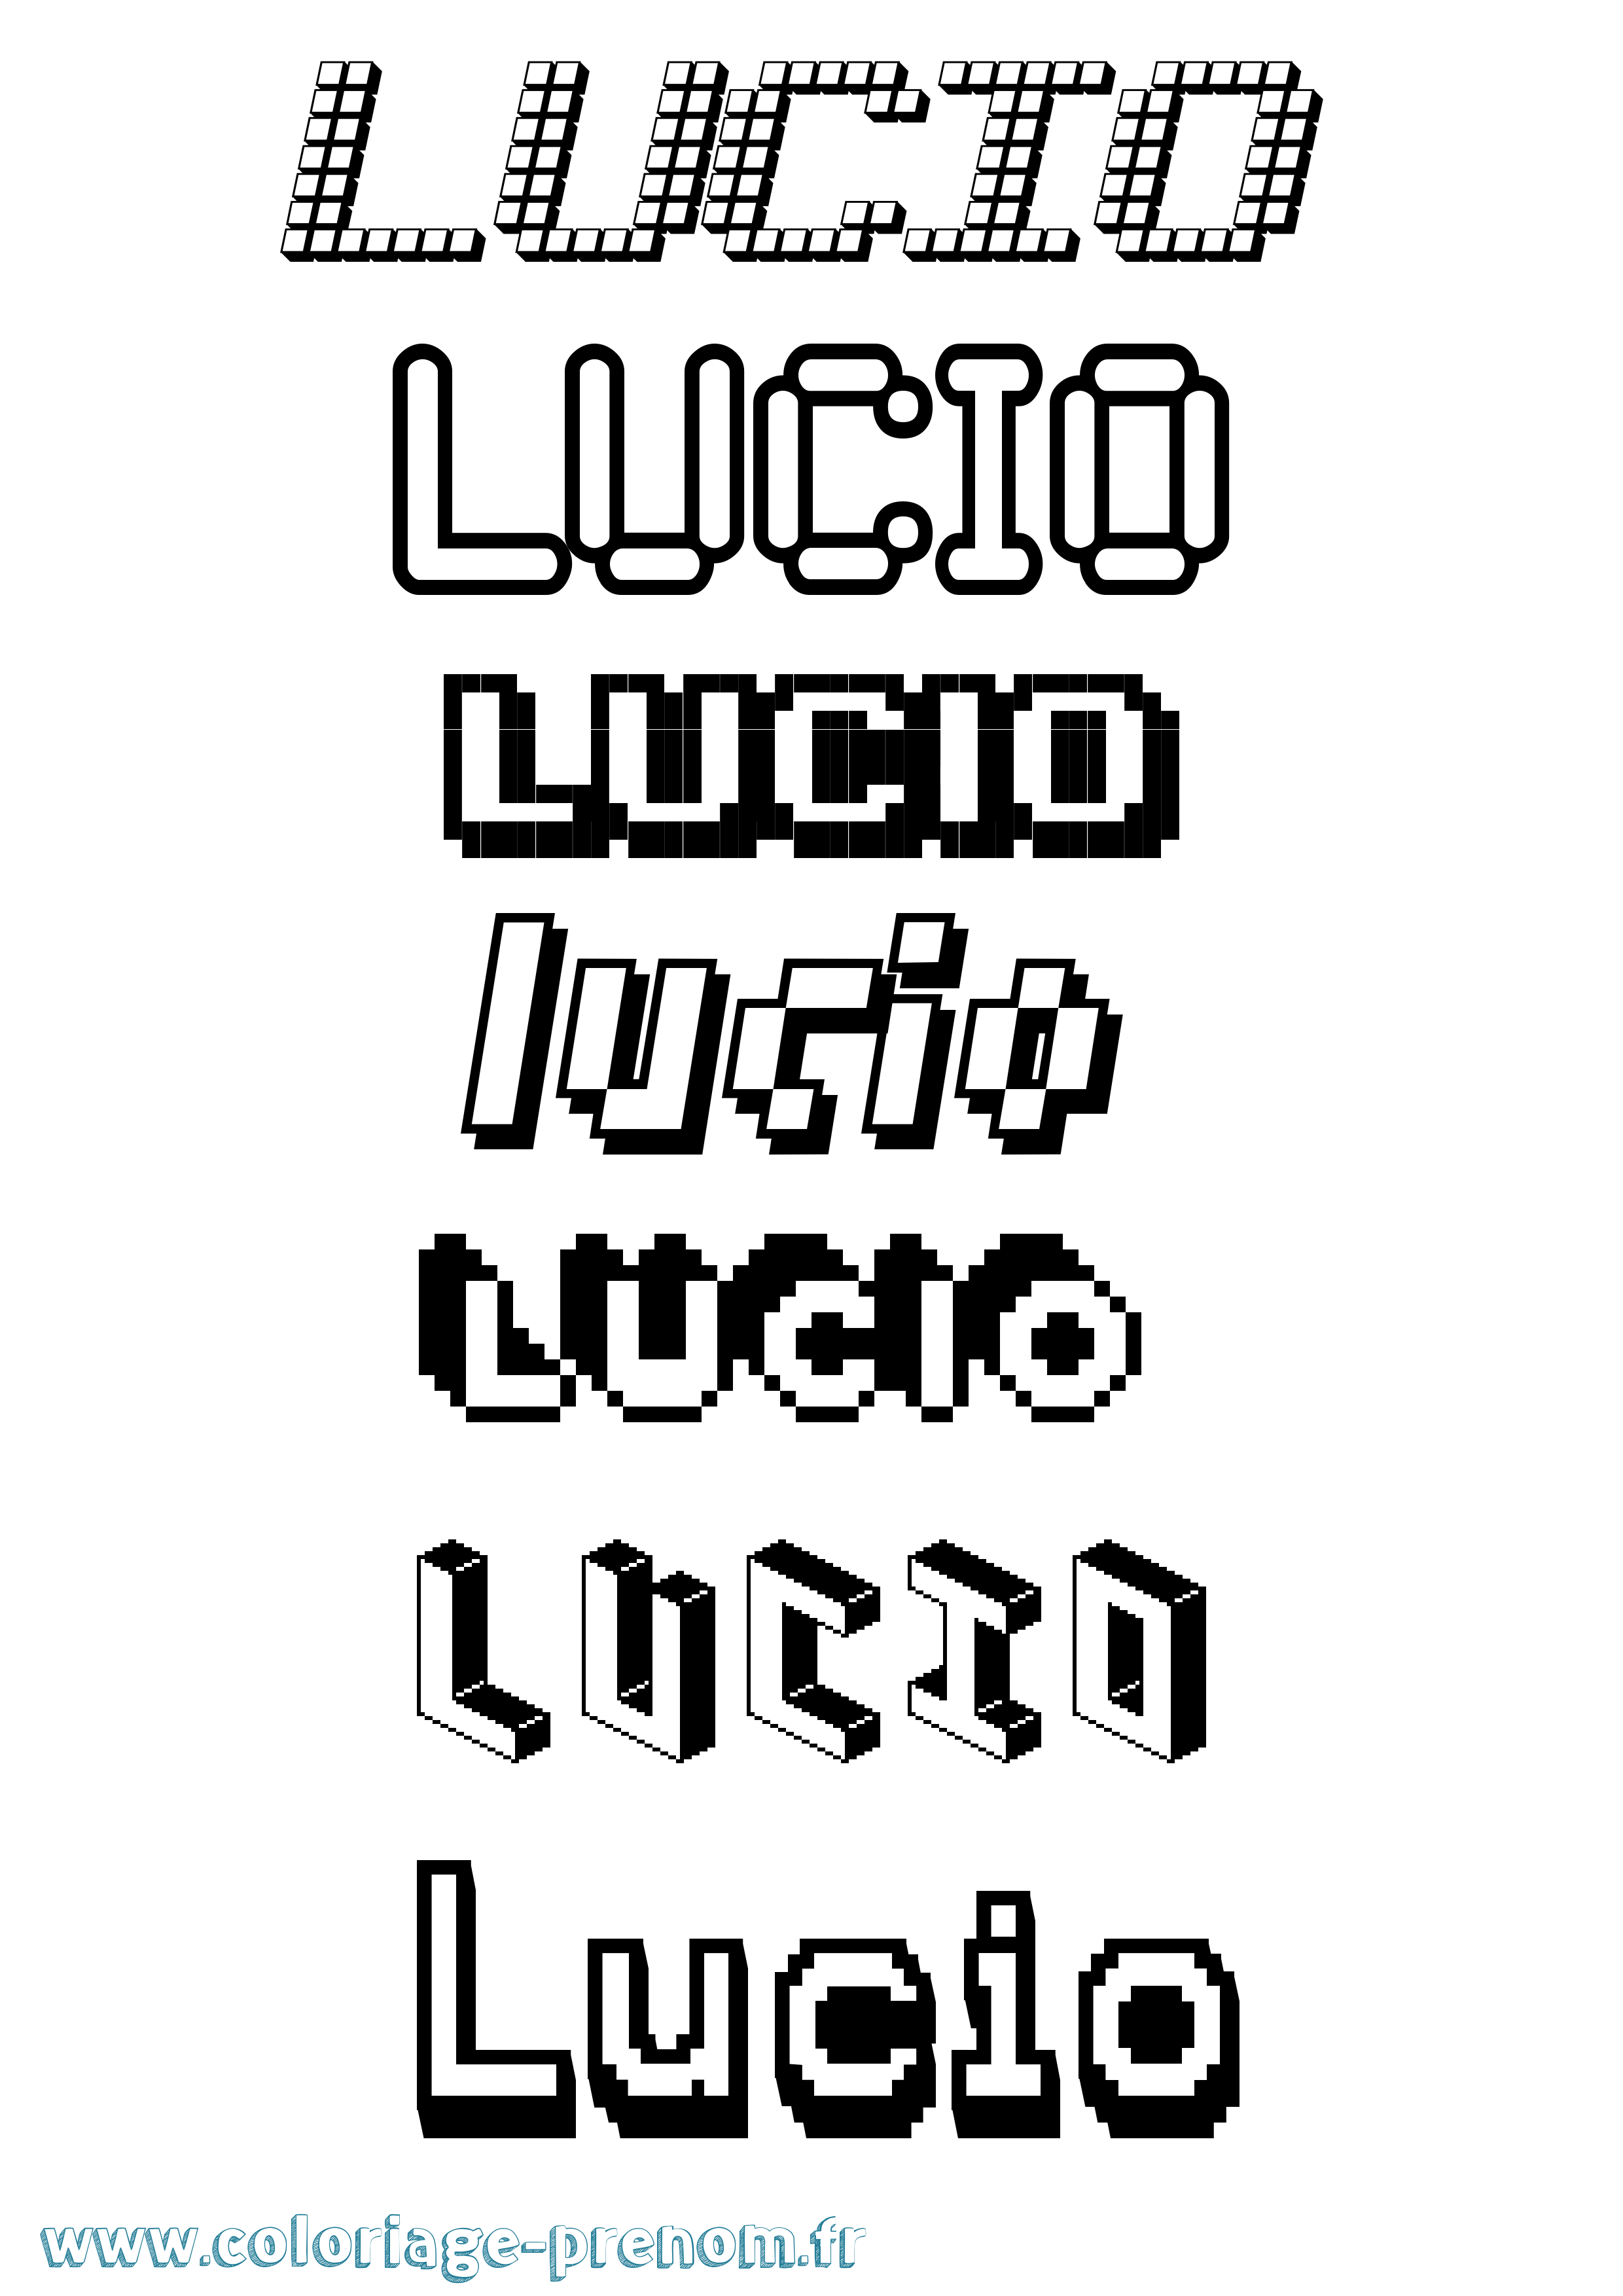 Coloriage prénom Lucio Pixel